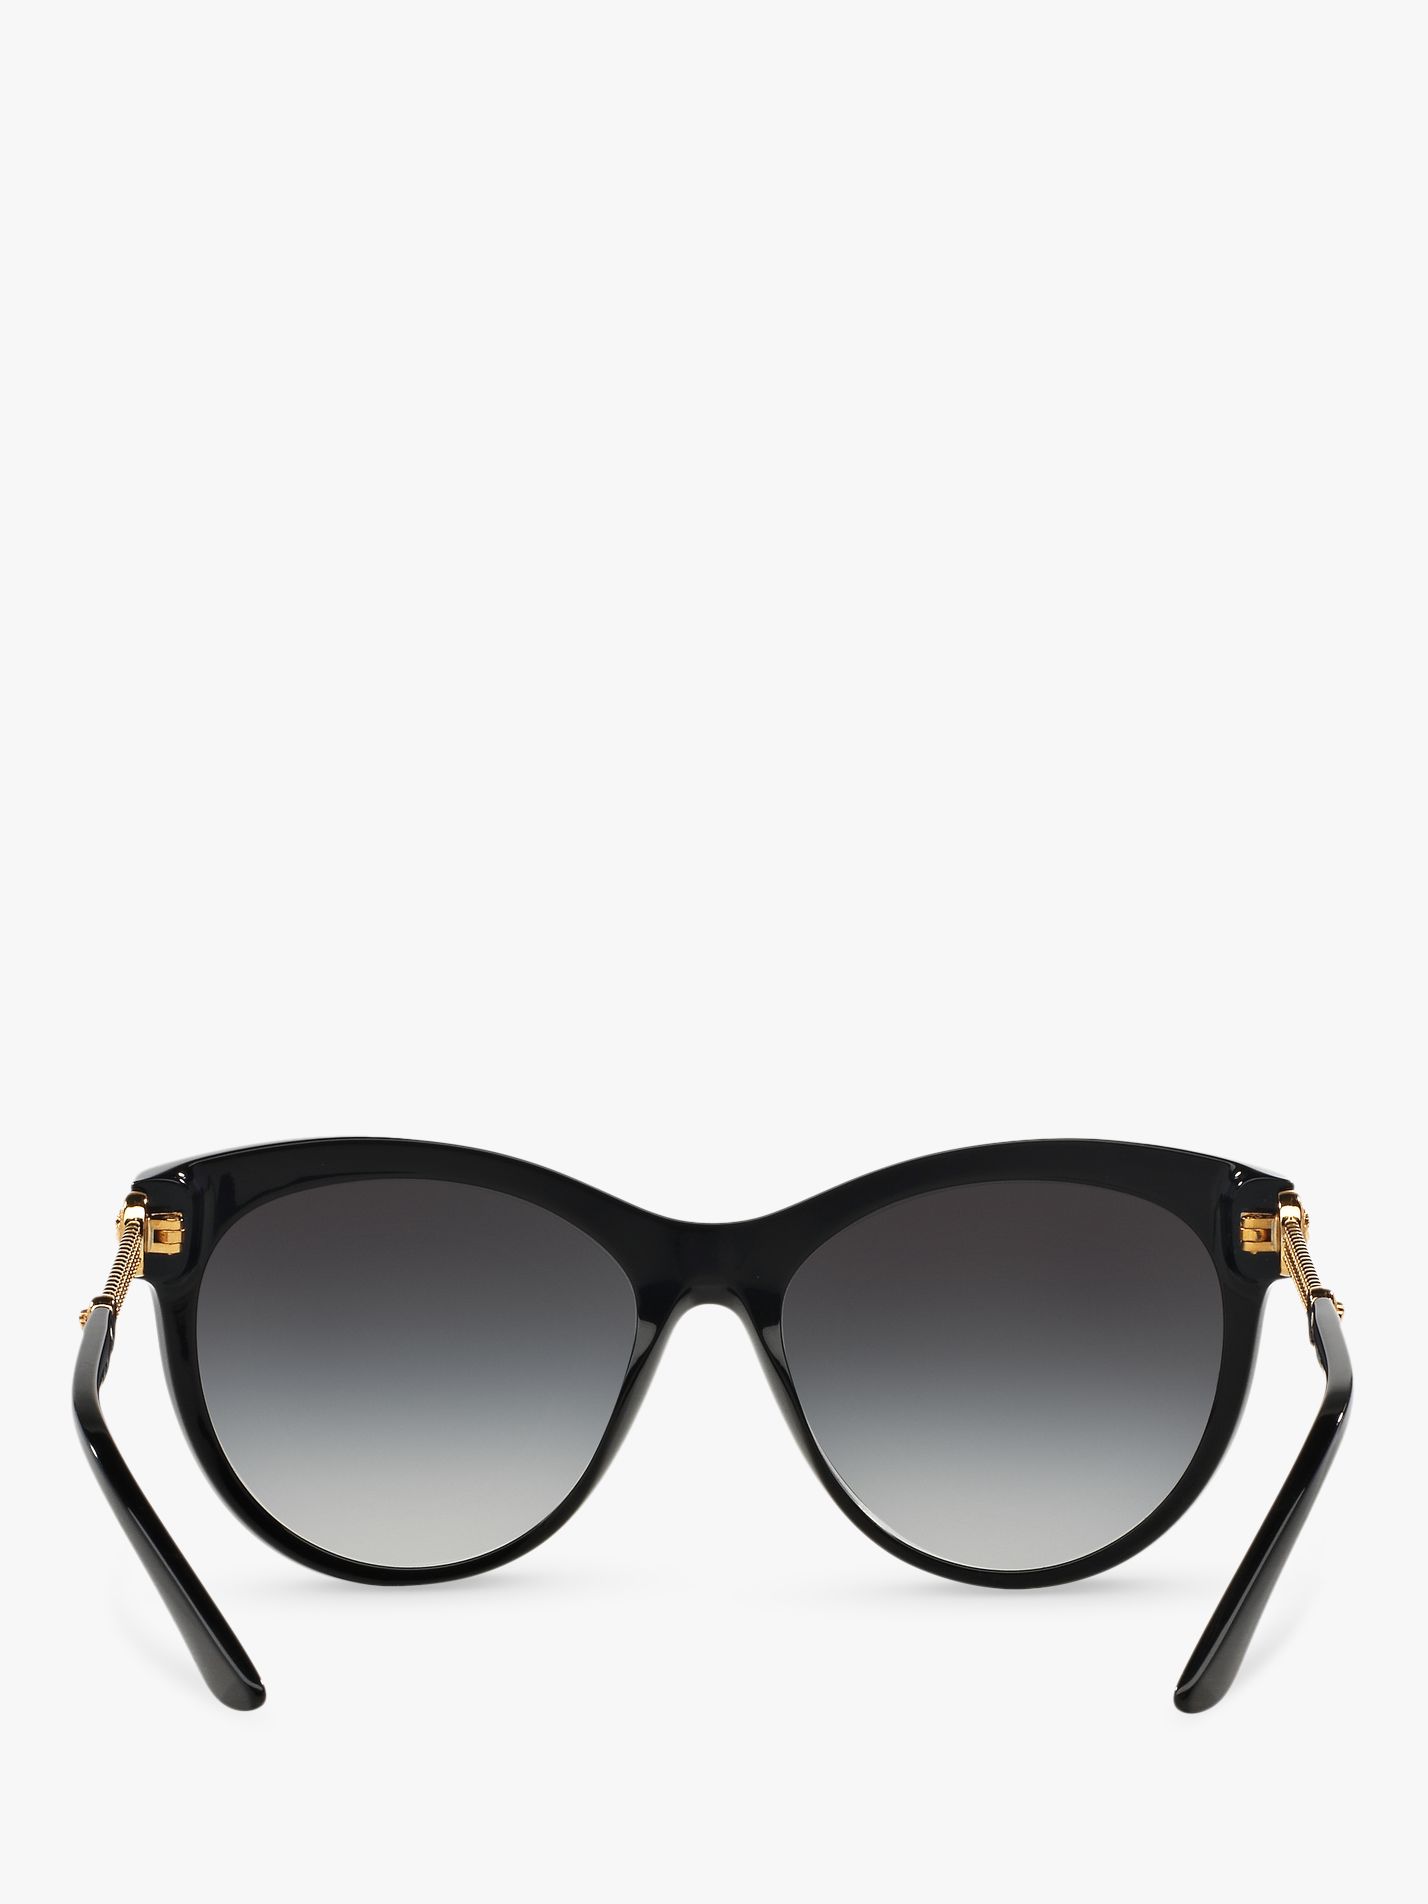 Versace VE4292 Women's Sunglasses, Black/Grey Gradient at John Lewis ...